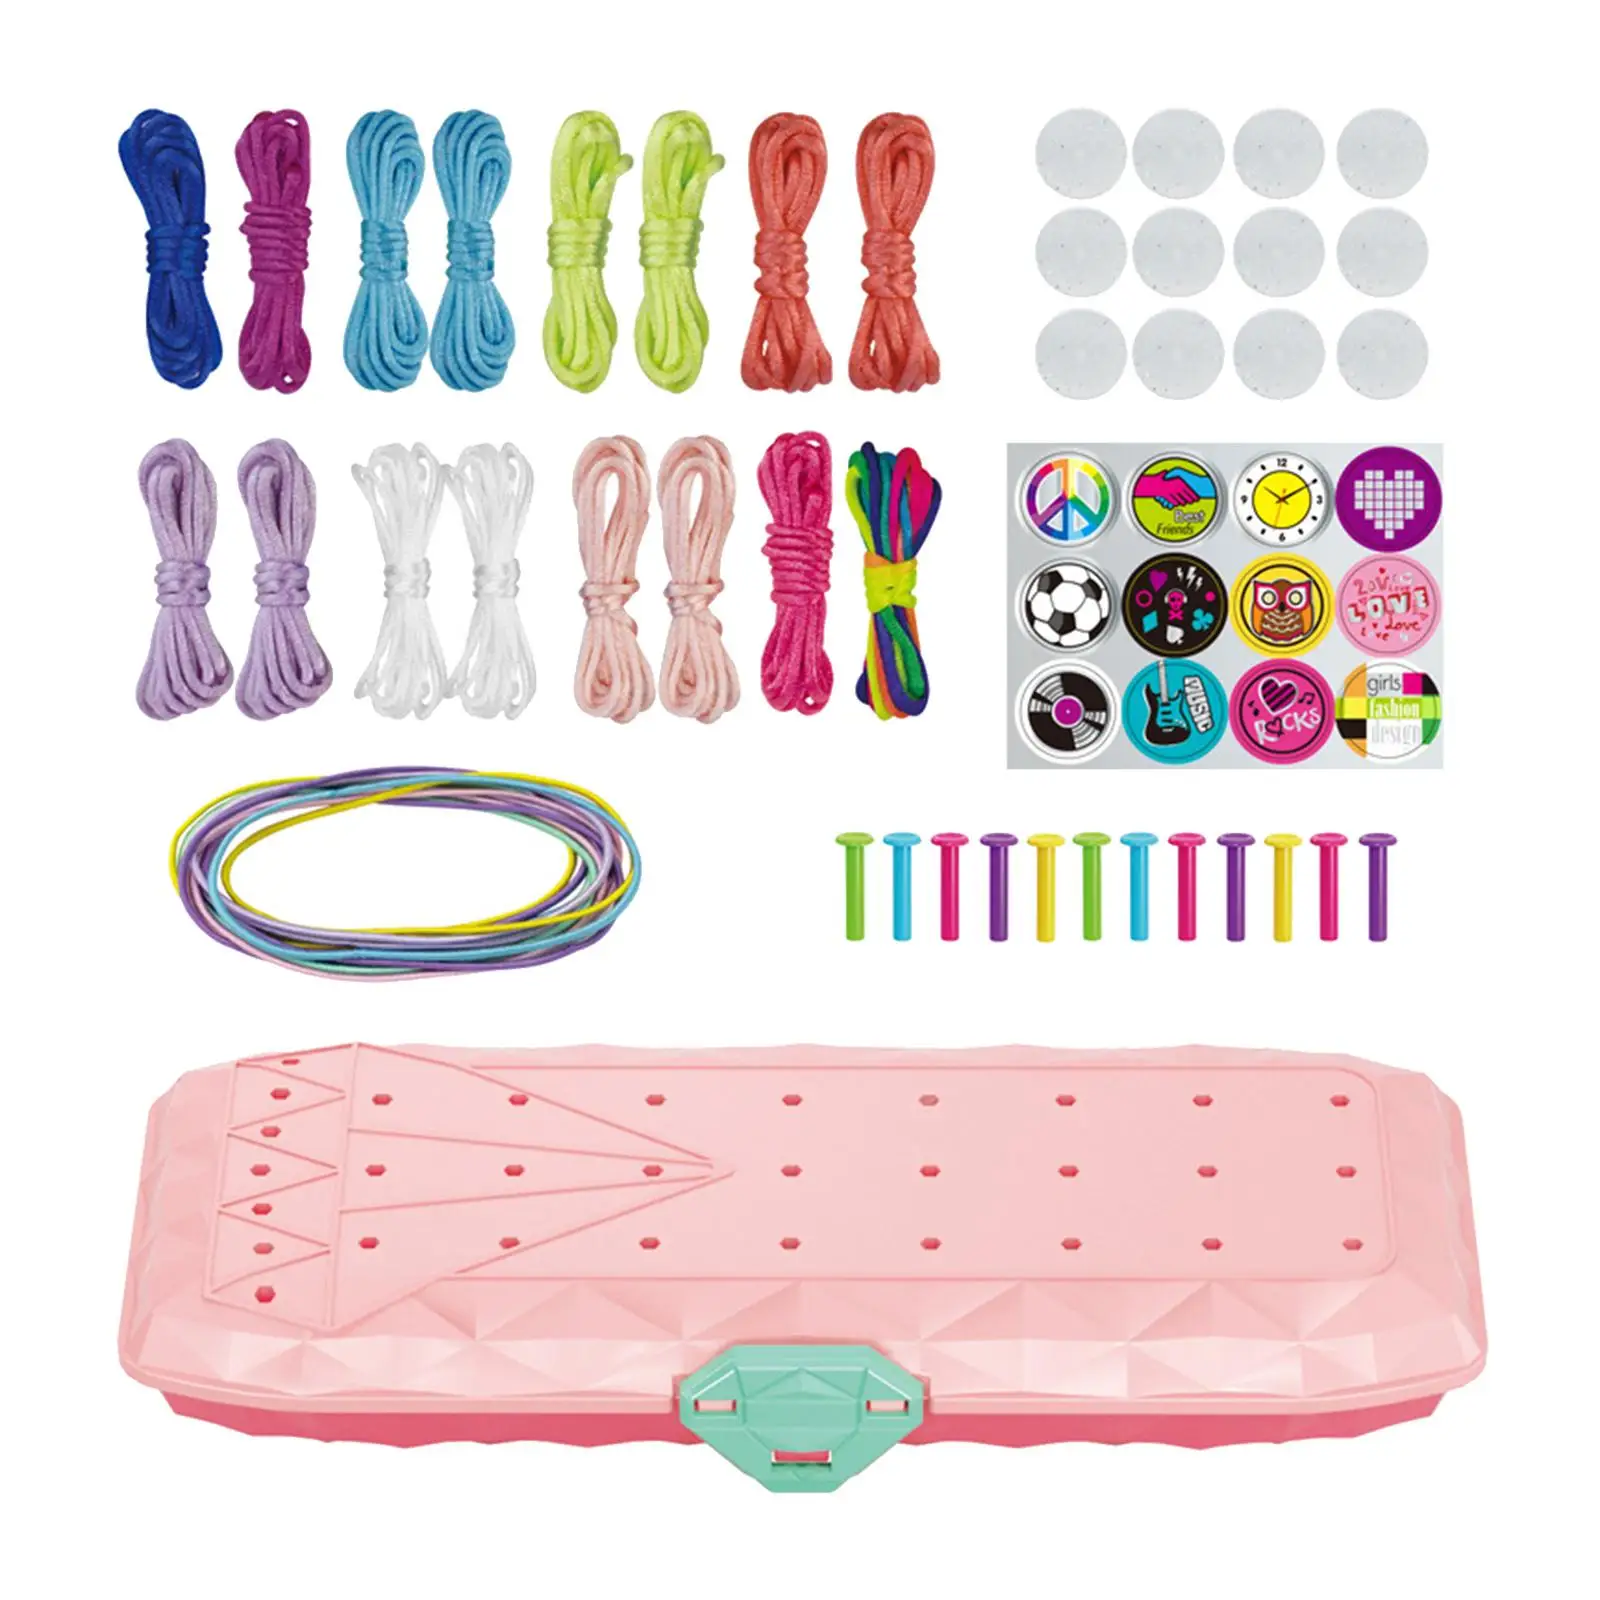 Bracelet Making Kit Elastic Rope Braiding Loom Multicolored Braiding Rope Bracelet Kit Jewelry Kit for Beginners Adults Holidays